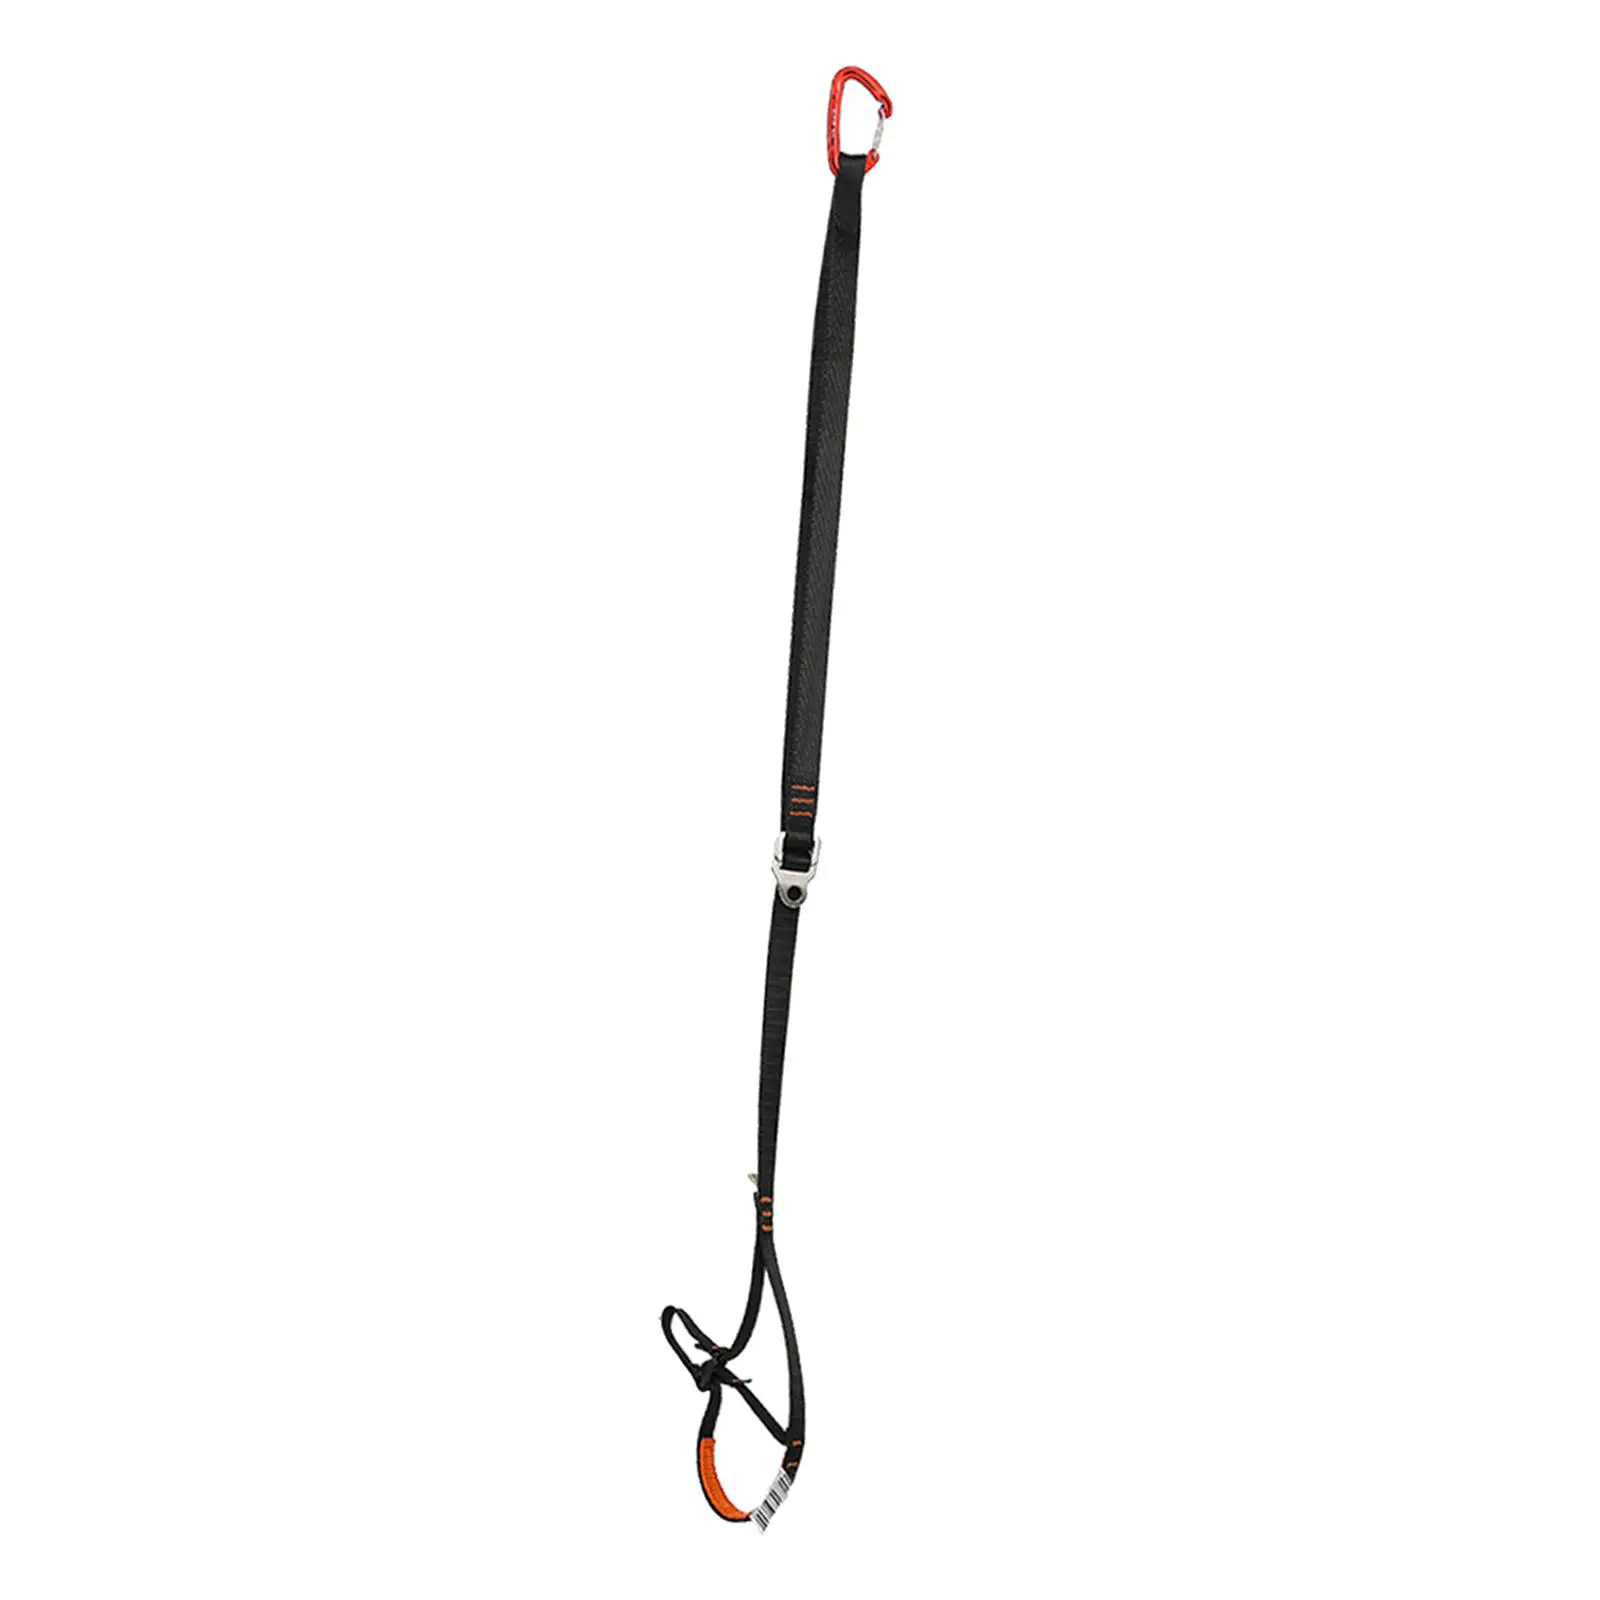 Outdoor Mountaineering Safety Rope,Adjustable Webbing Foot Loop Climbing Foot Loop Ascender Sling Belt Foot Pedal Band